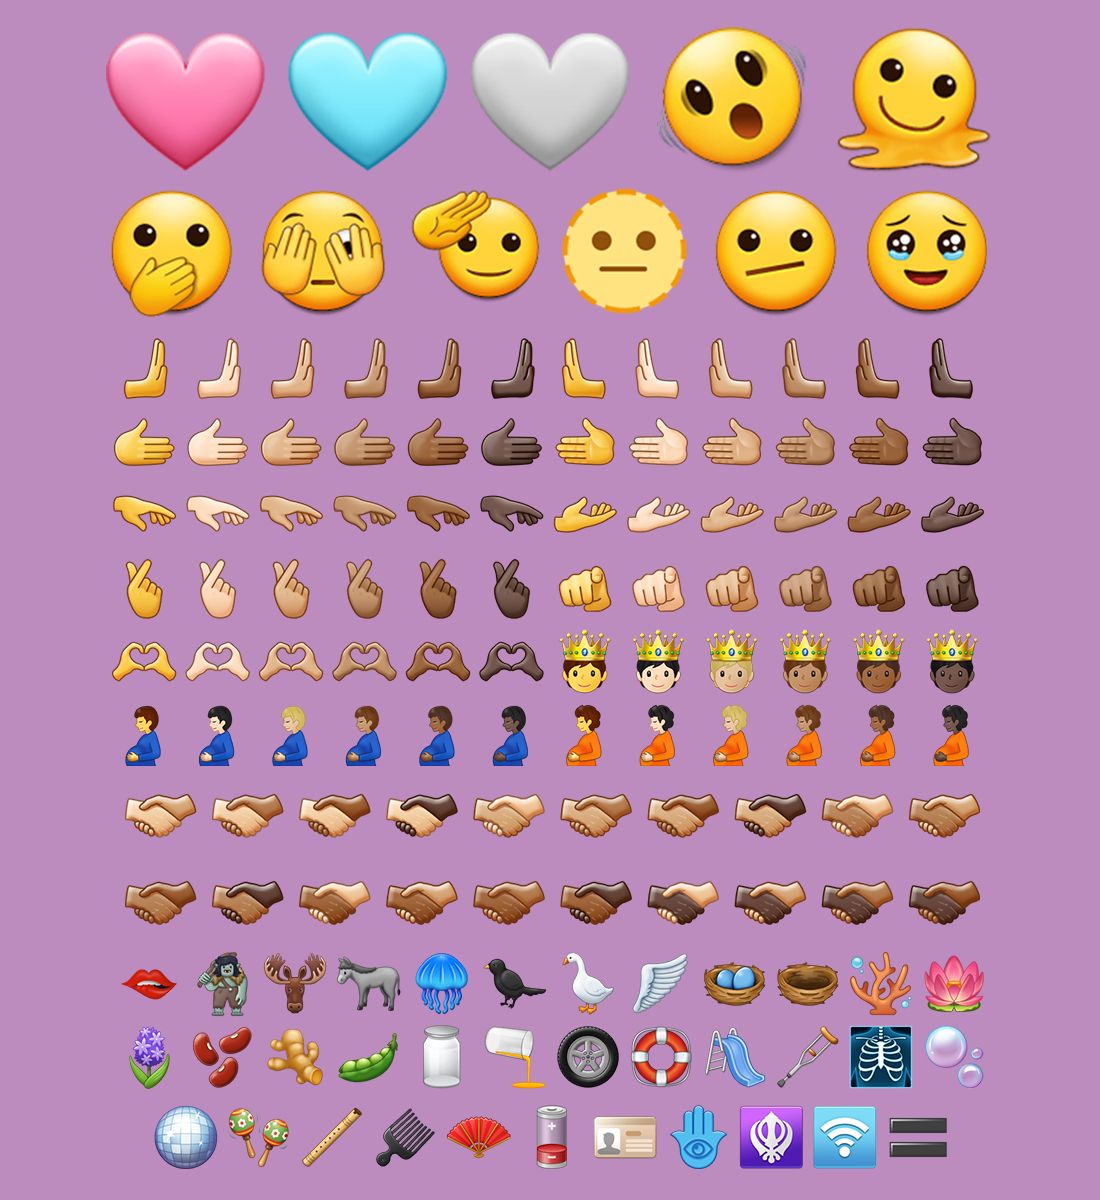 Emoji Symbols List